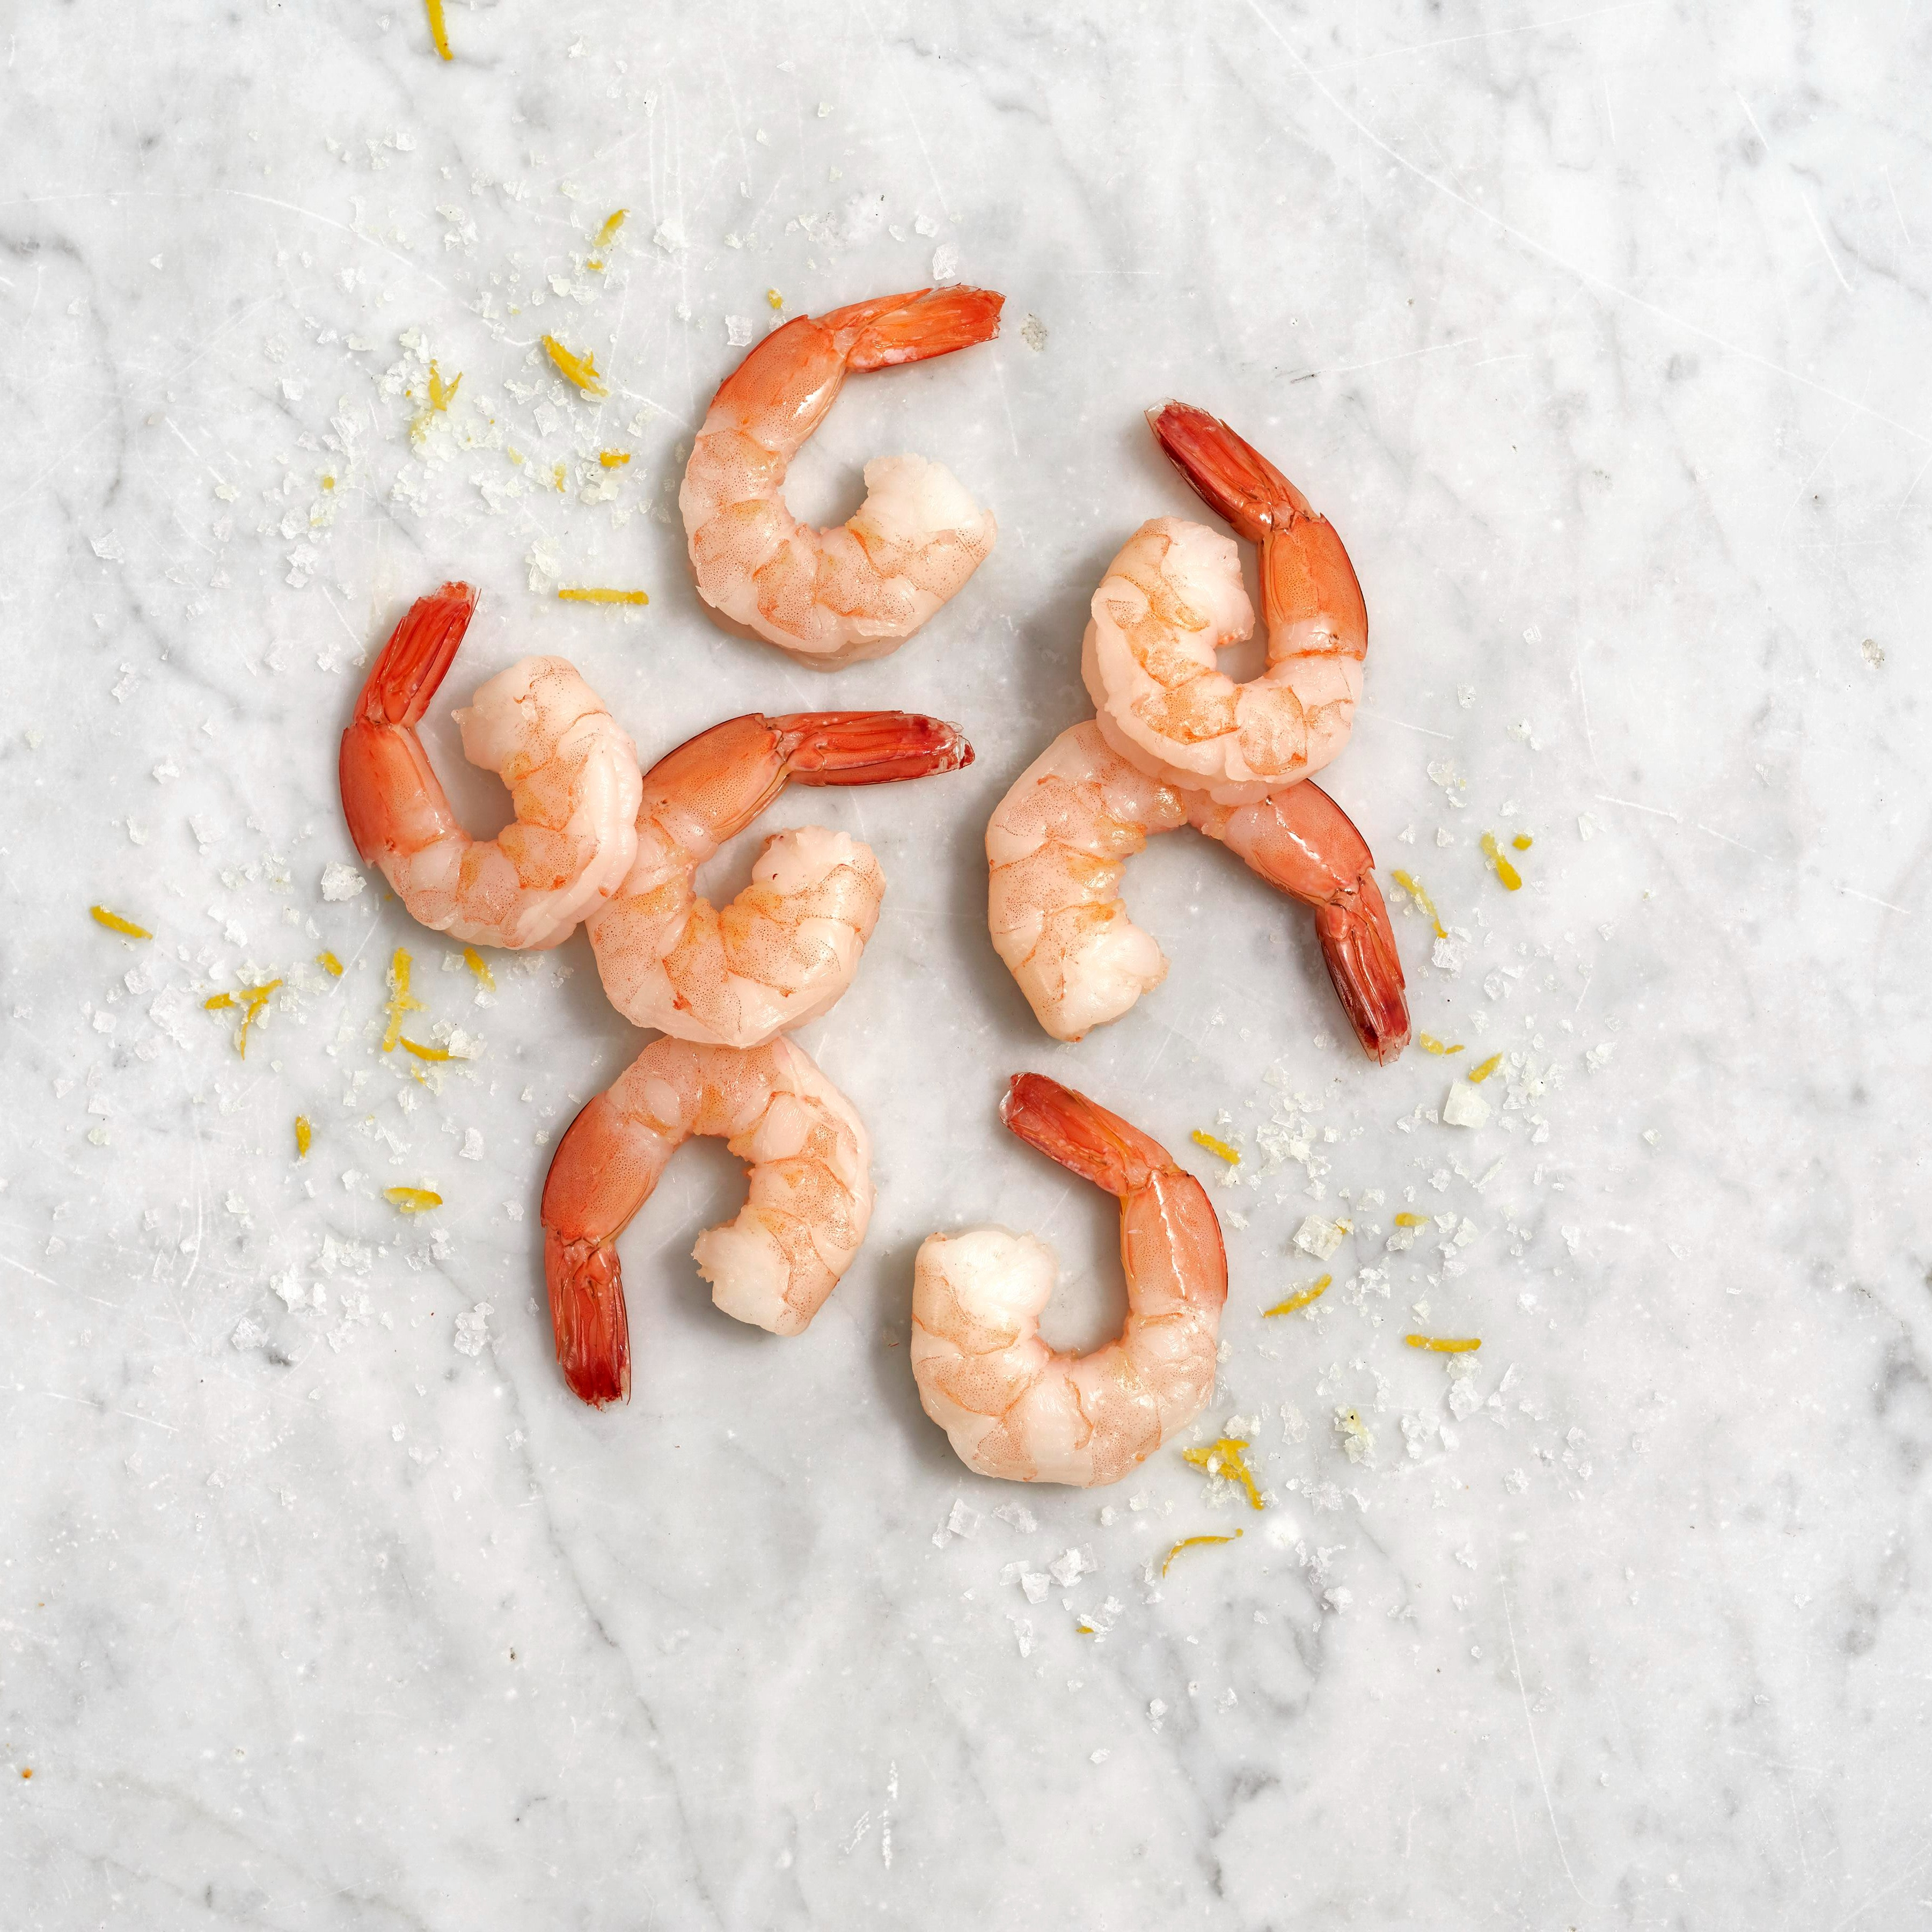 6015 WF Raw Fully Cooked Peeled & Deveined Jumbo Shrimp Tail On Seafood